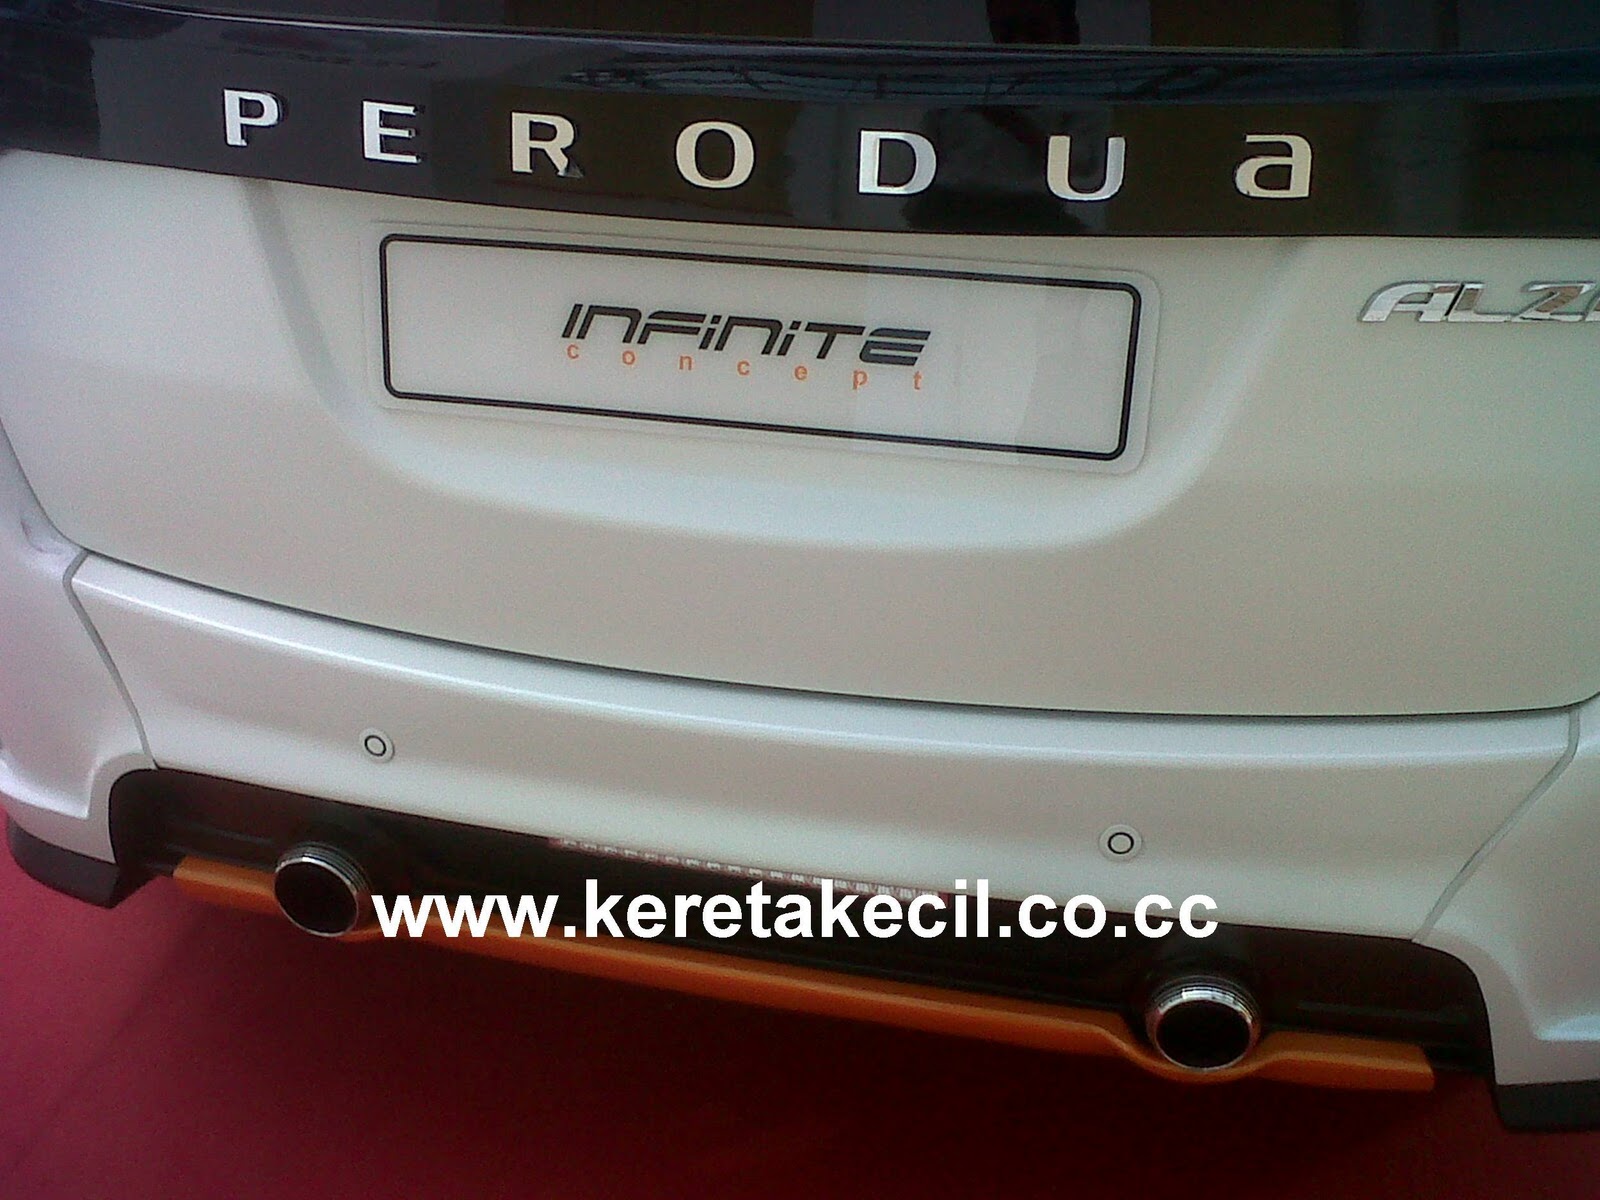 Kereta Kechil: Alza Infinite, New Perodua Concept Car.